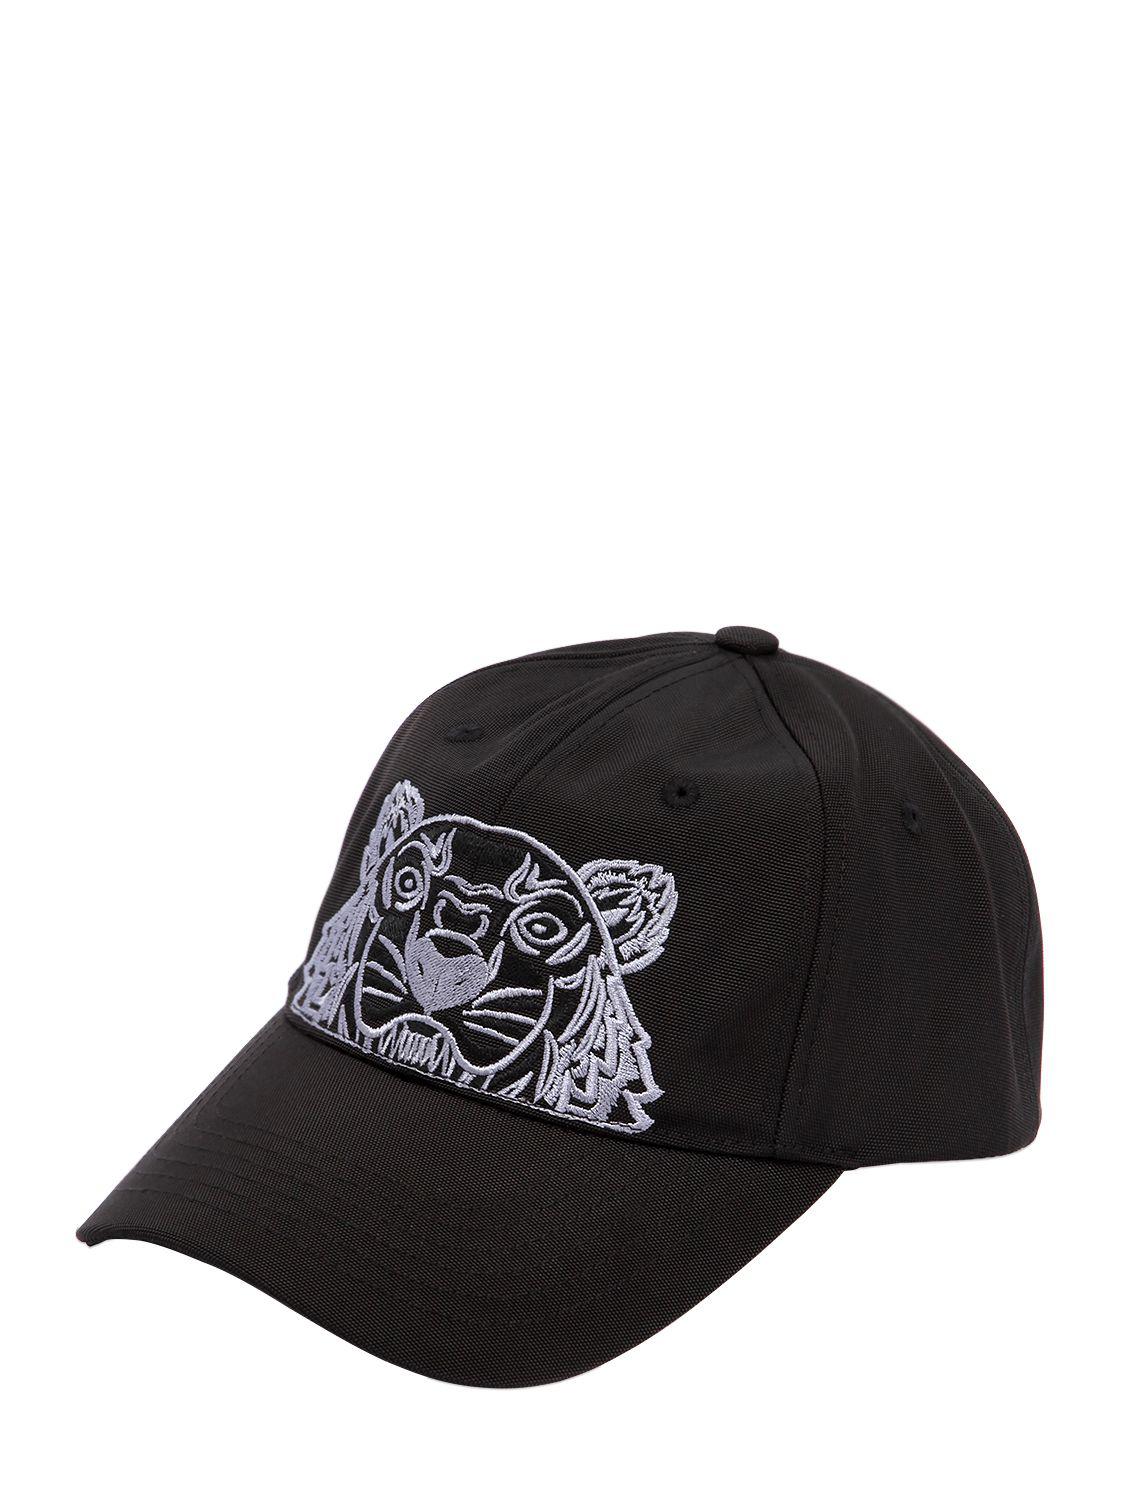 KENZO Tiger Canvas Cap in Black for Men | Lyst